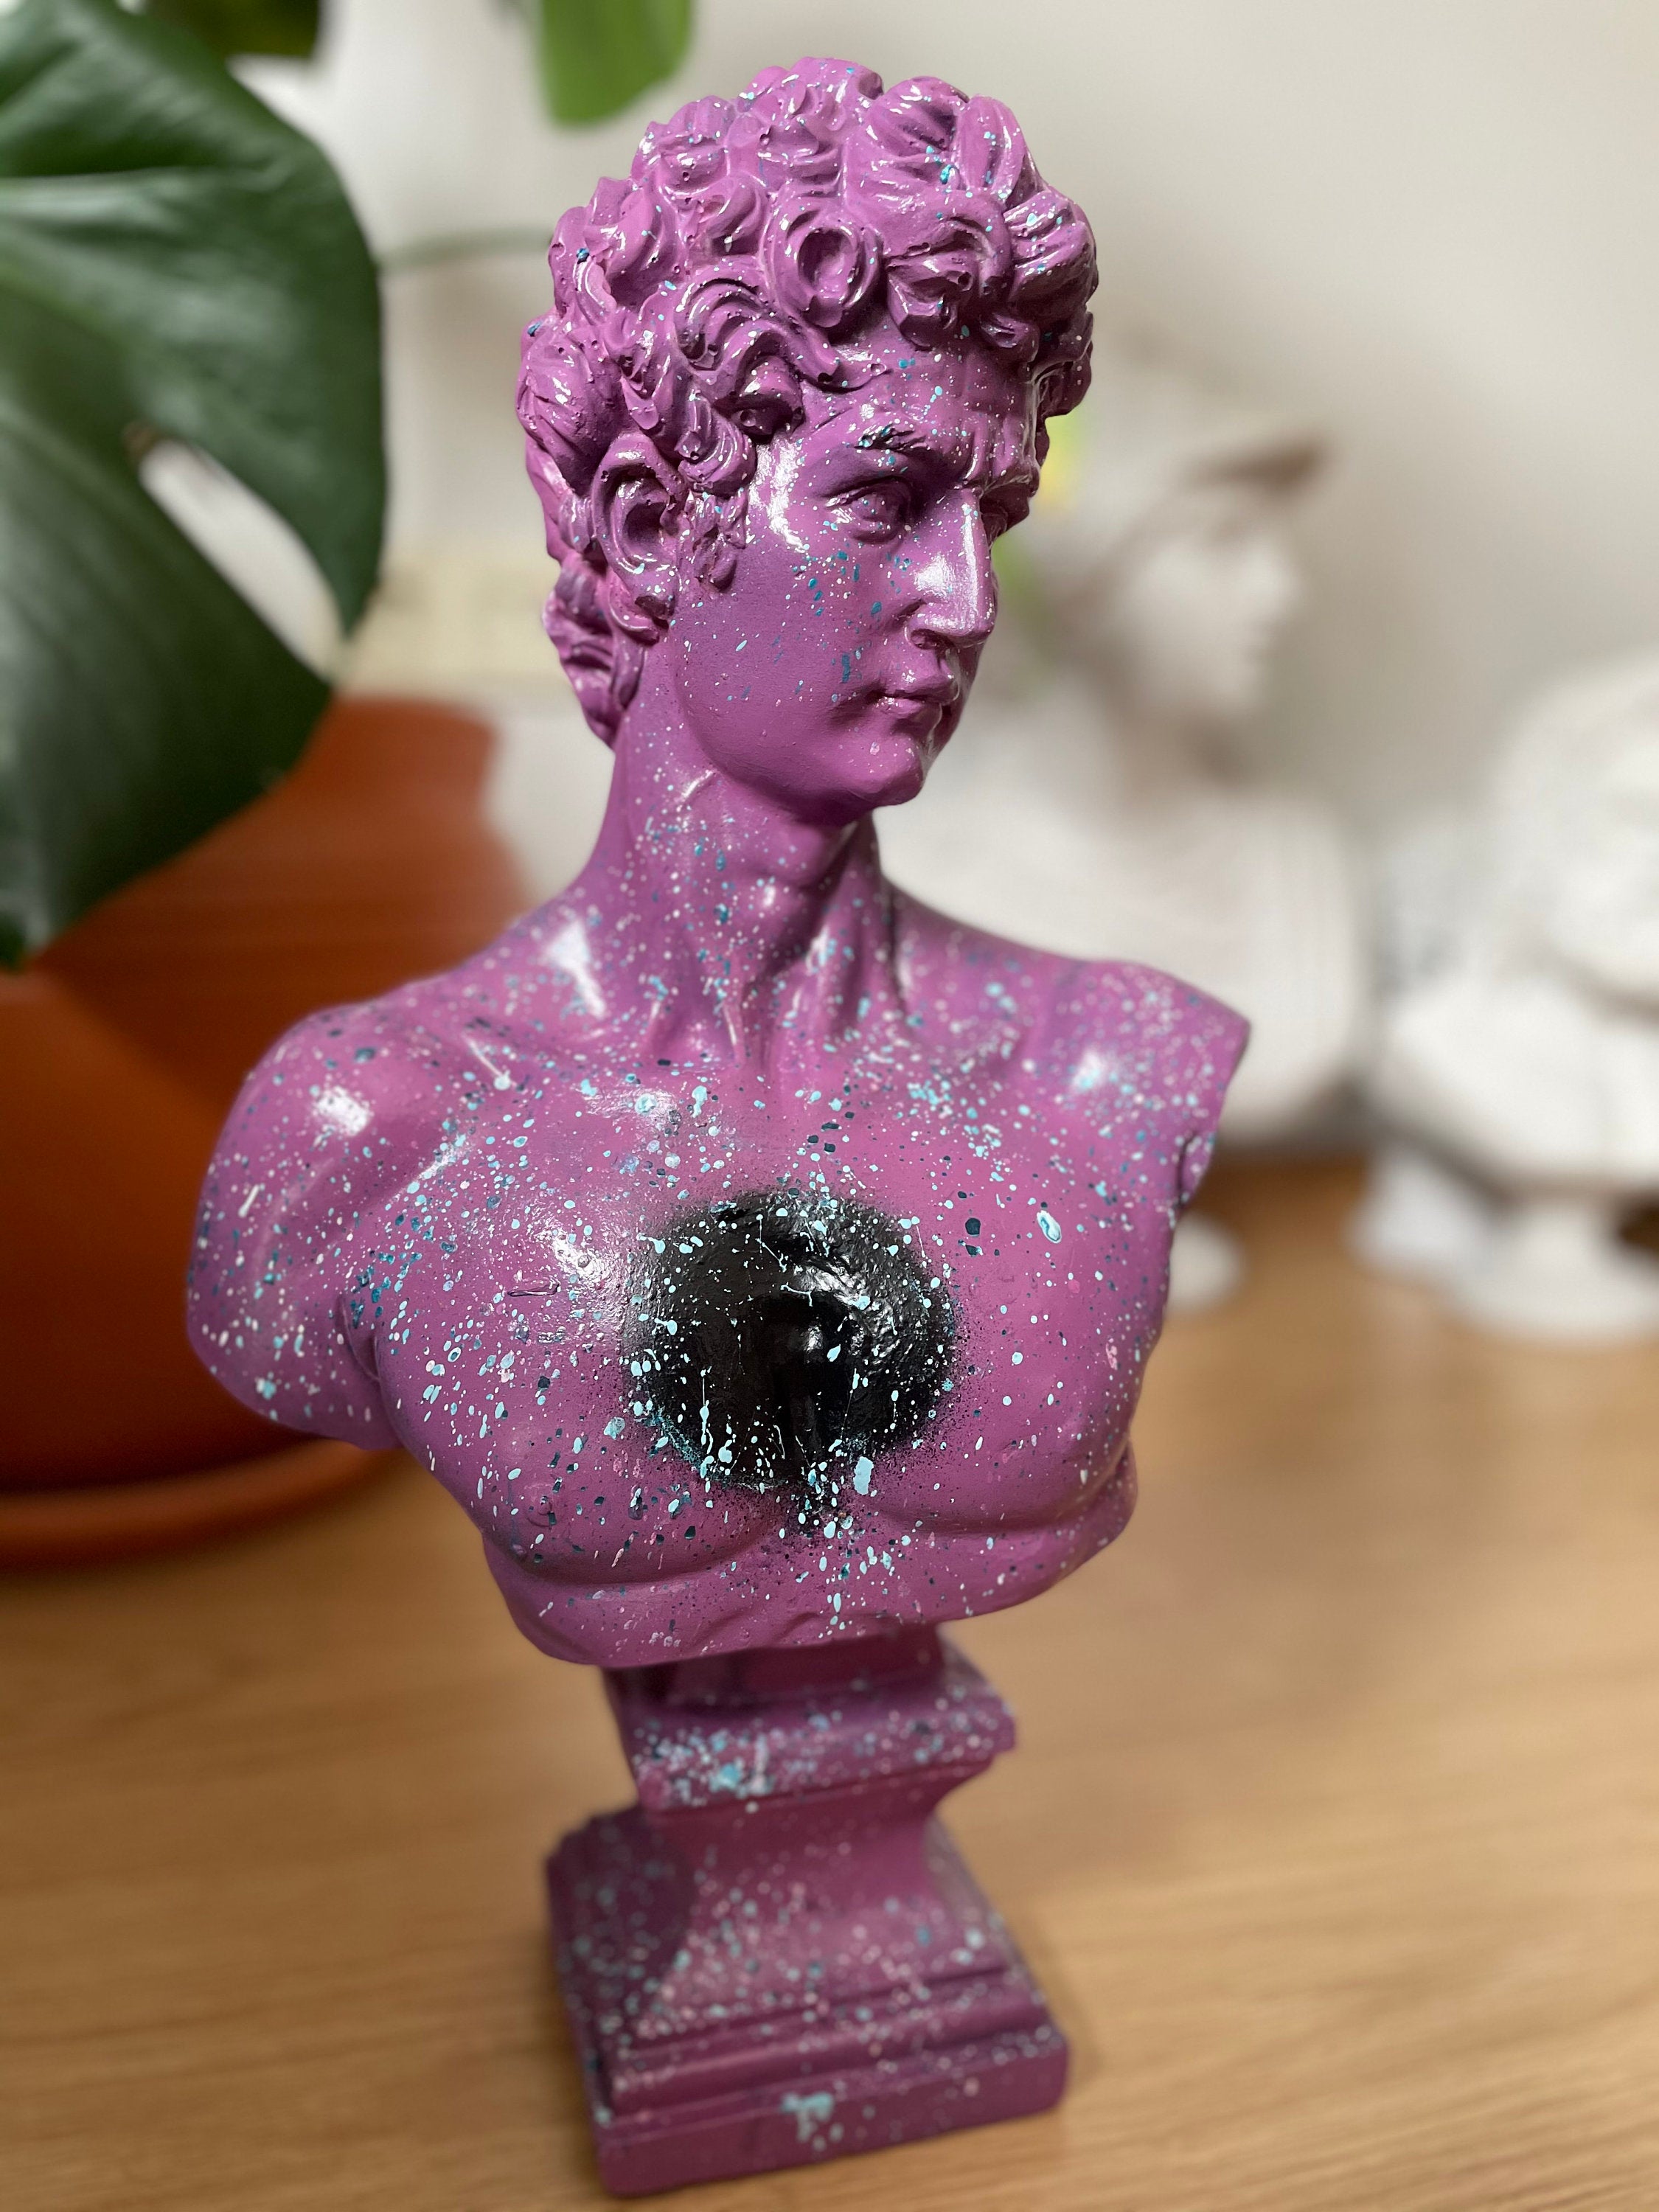 Cosmic Elegance: Large David Bust Sculpture with Purple Cosmos Design